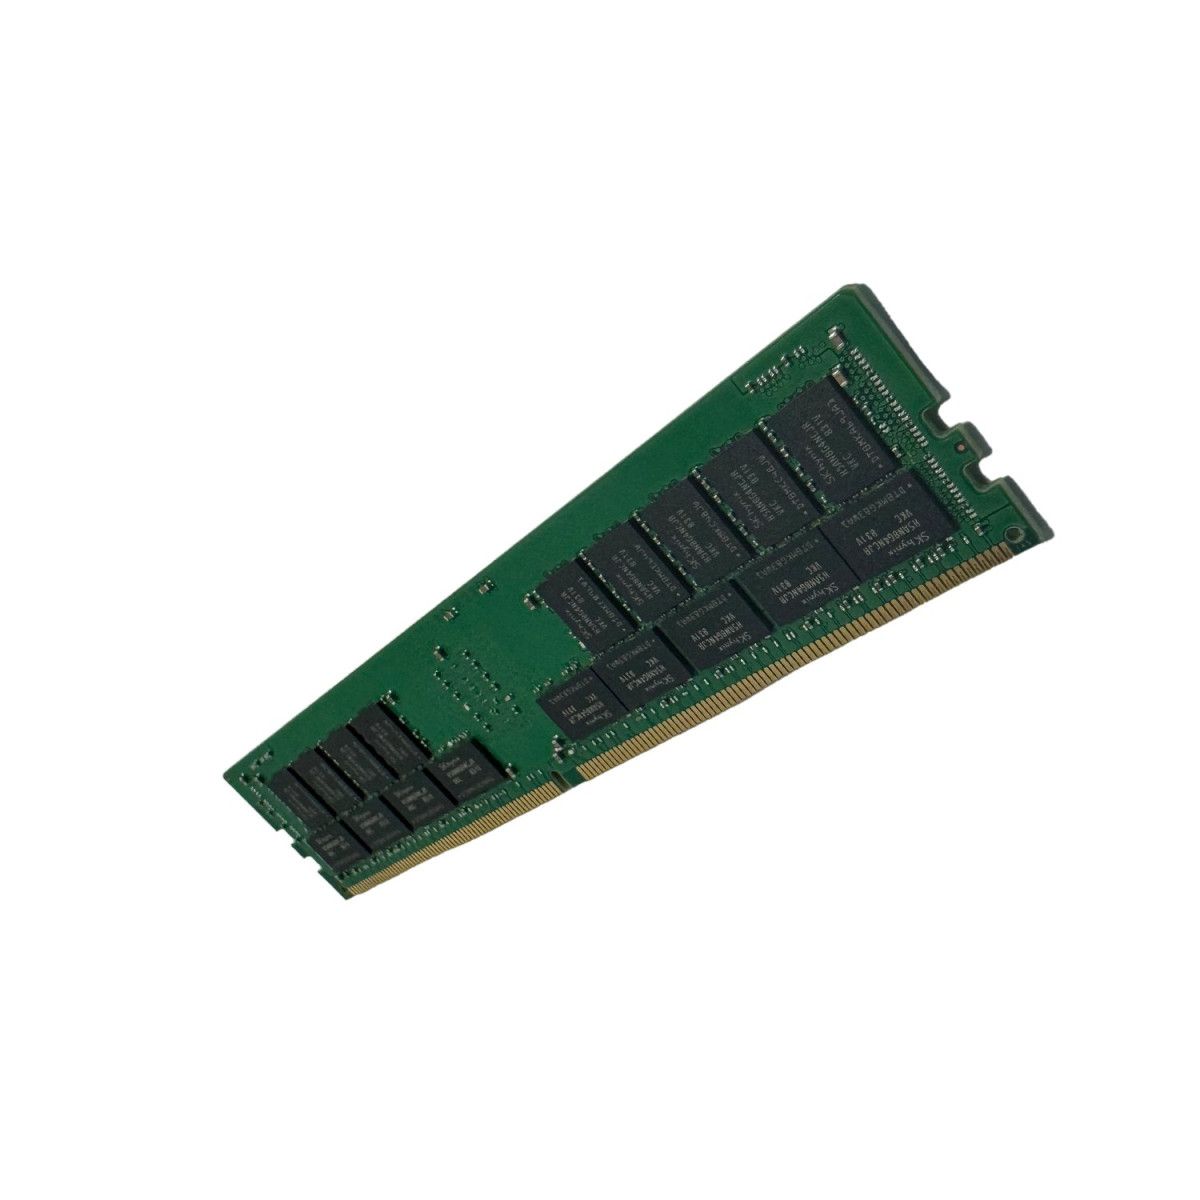 3TQ39AT-MS - Memstar 1x 8GB DDR4-2666 ECC UDIMM PC4-21300V-E - Memorie OEM compatibilă cu Mem-Star 1 - Memstar 